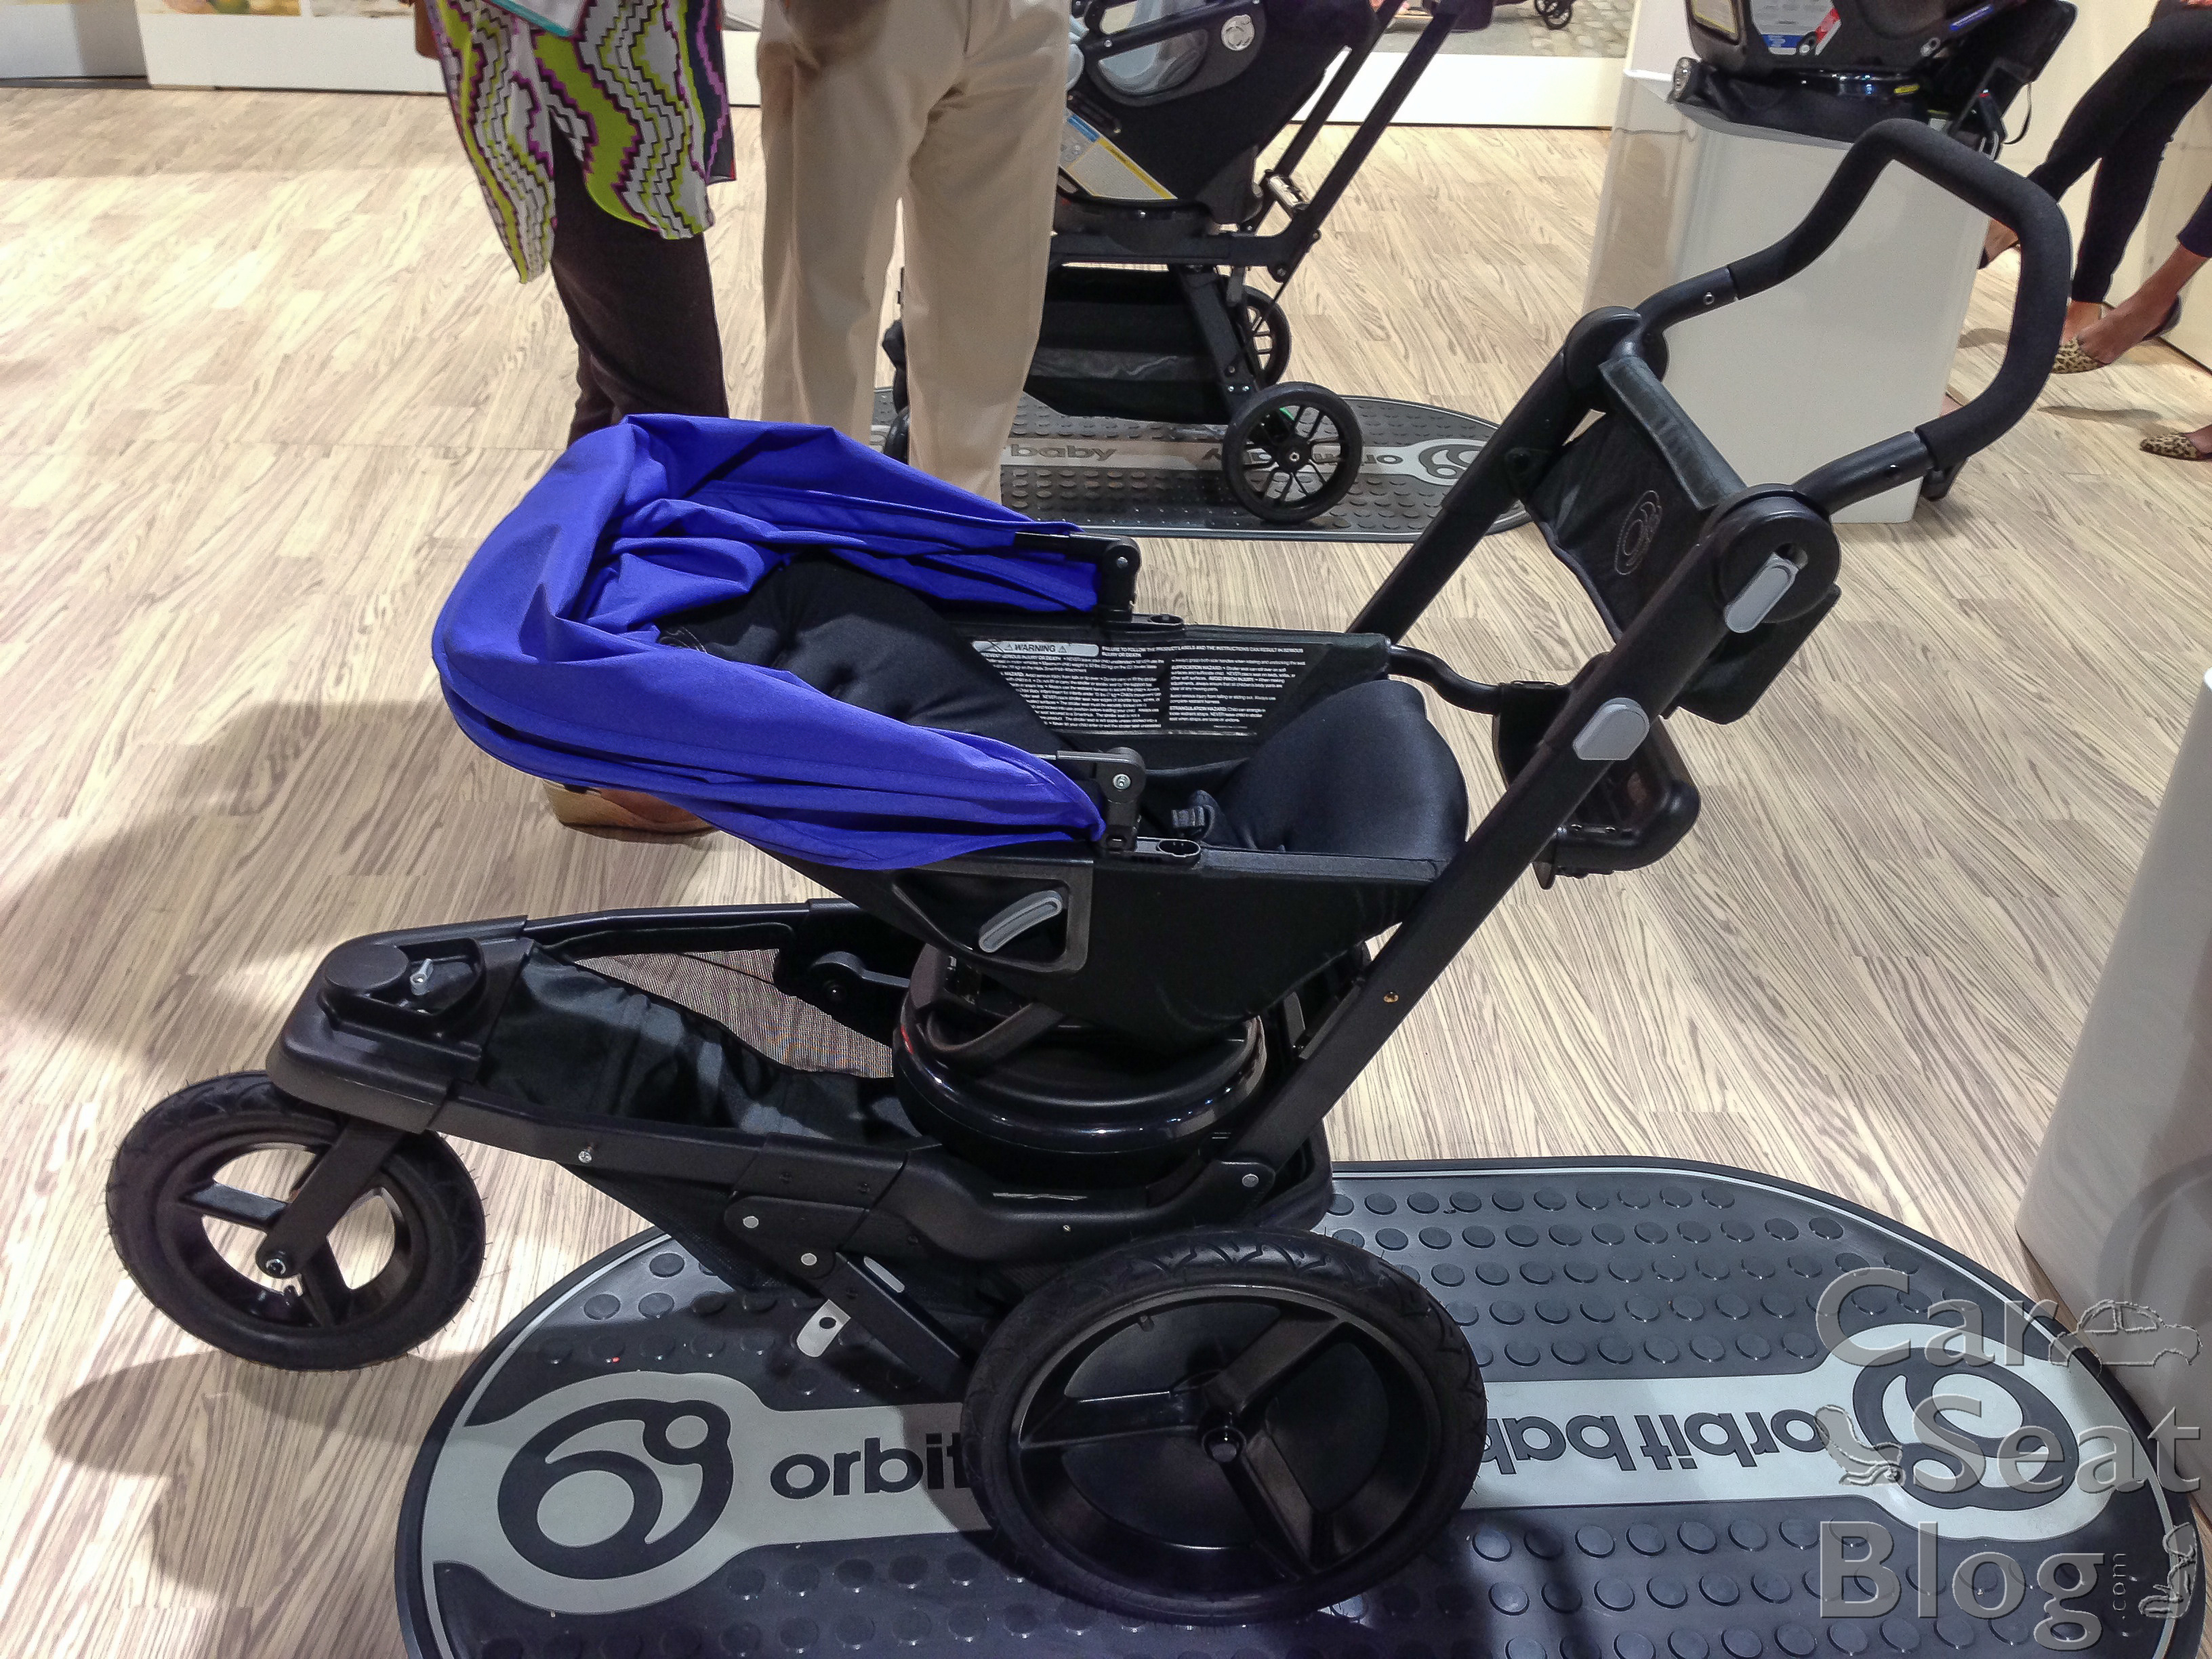 orbit baby jogging stroller